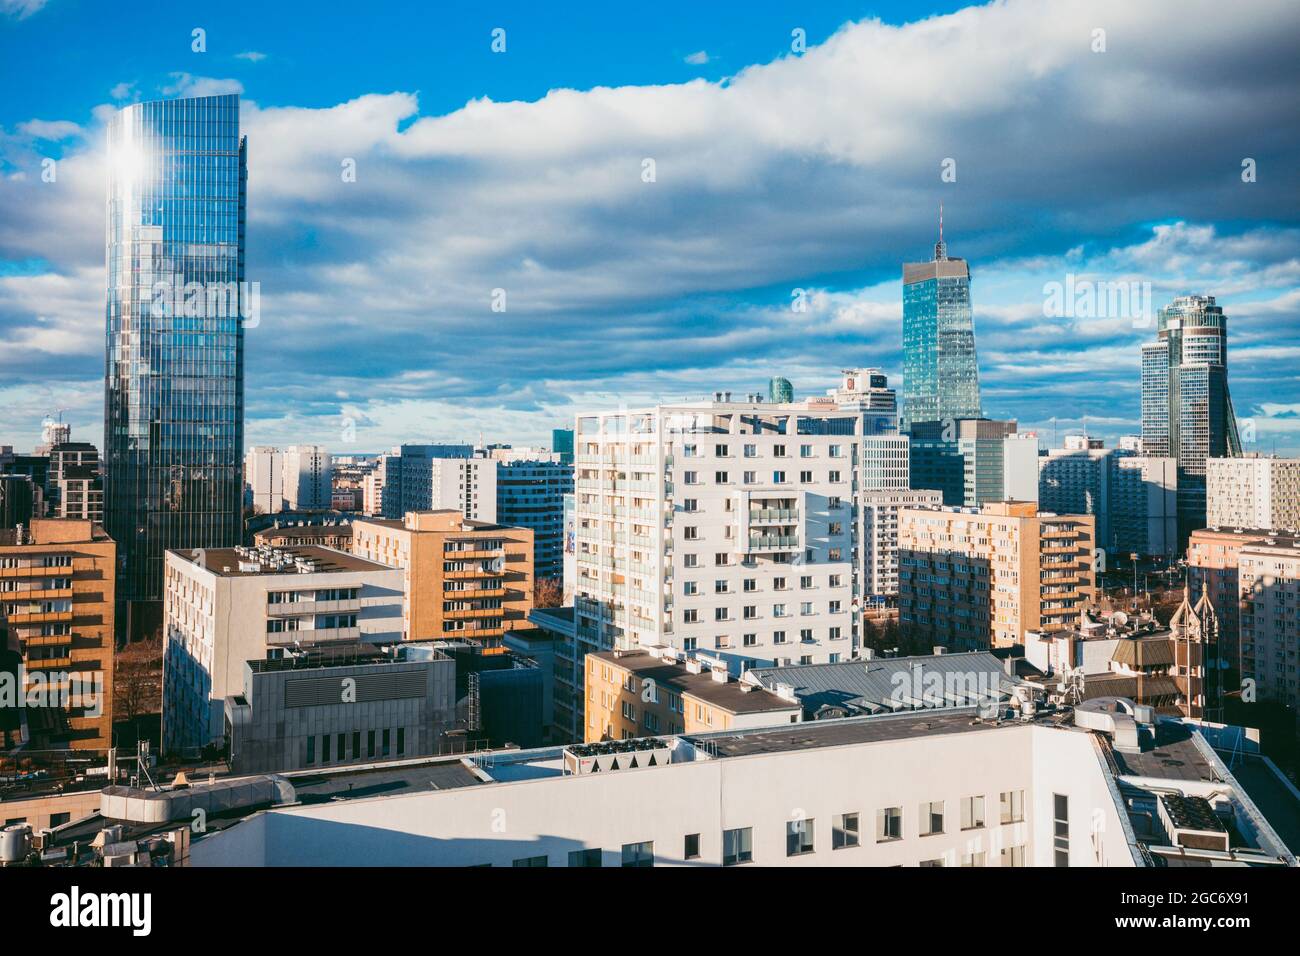 Poland, Masovia, Warsaw, City skyline with skyscrapers Stock Photo